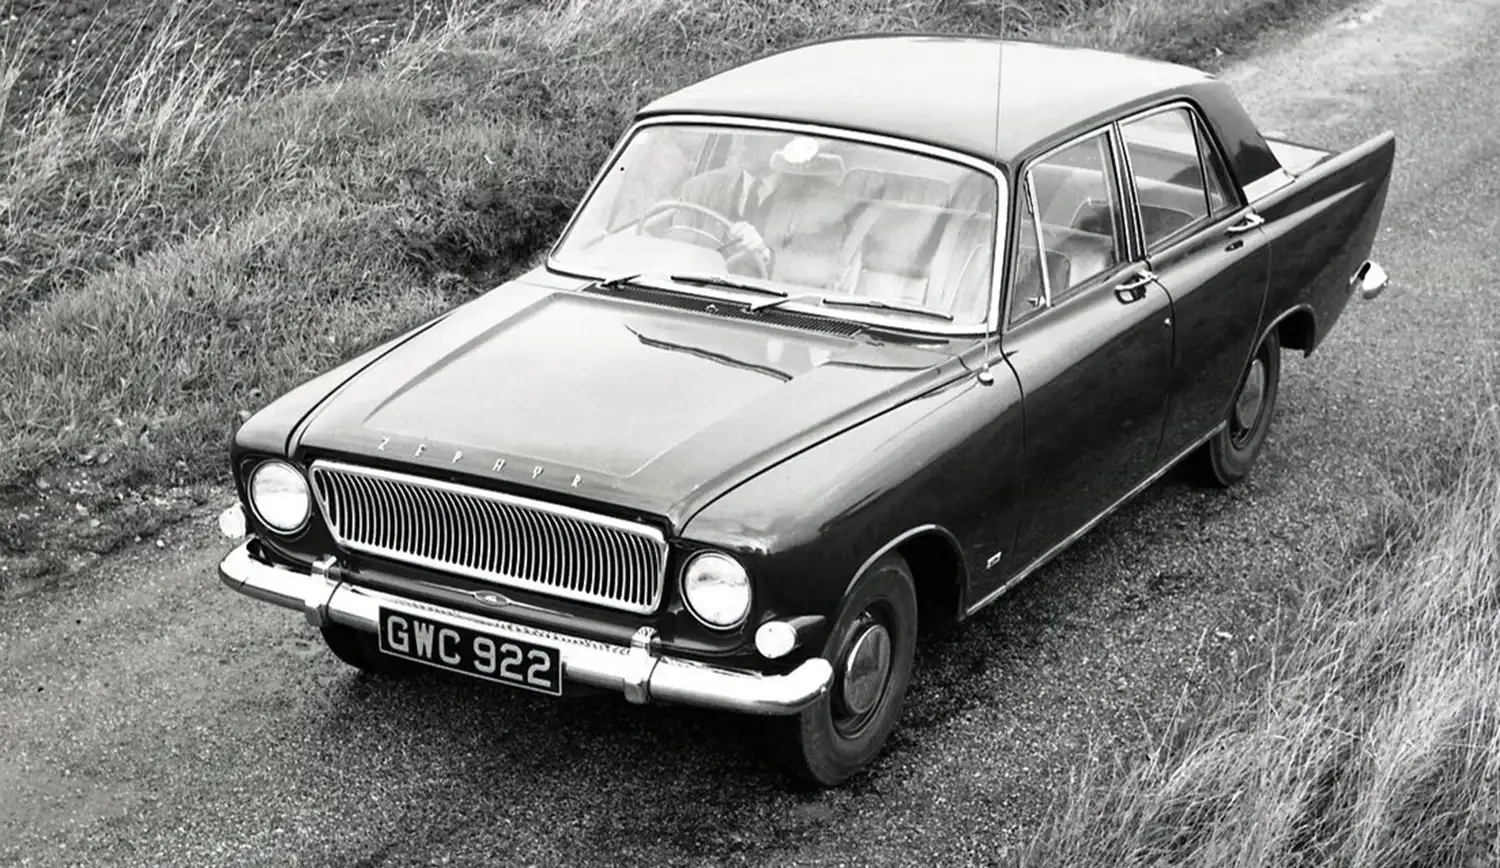 1962 Ford Zephyr Mark III: The Classic Elegance